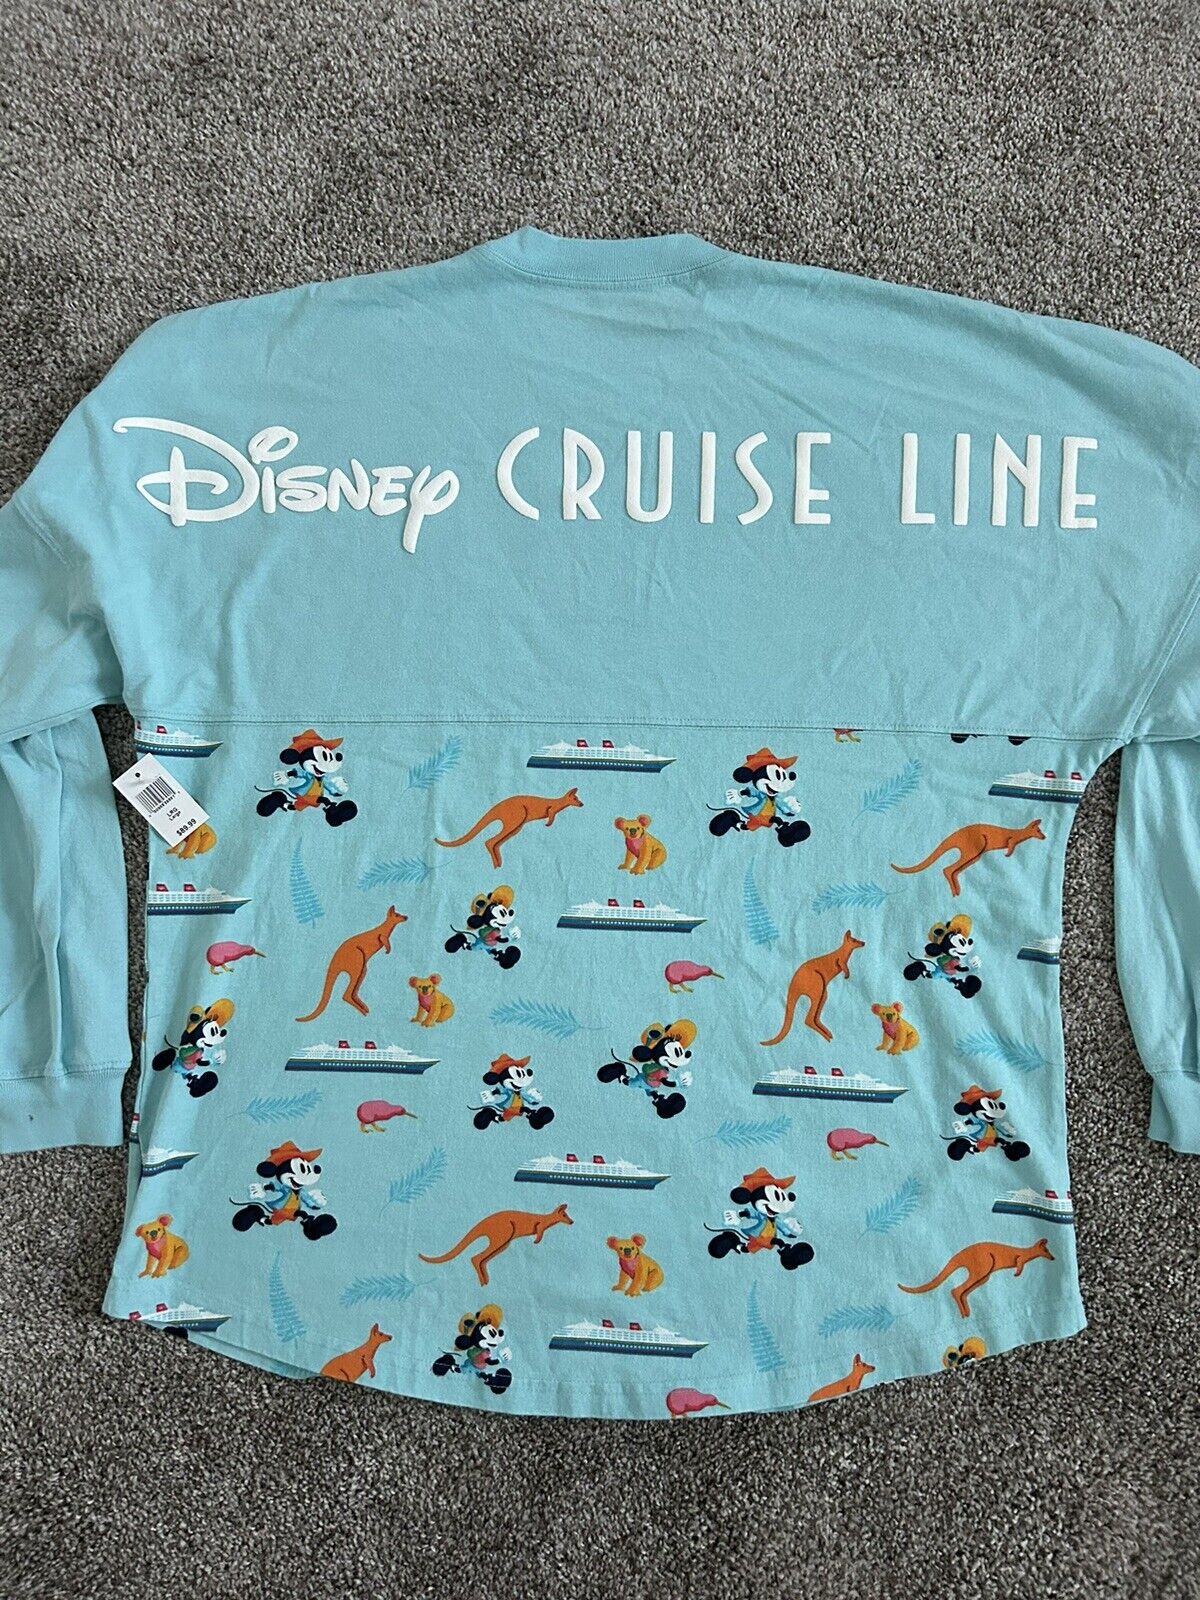 Disney Cruise Line Ship Castaway Cay Mickey Minnie Mouse Spirit Jersey Size XL